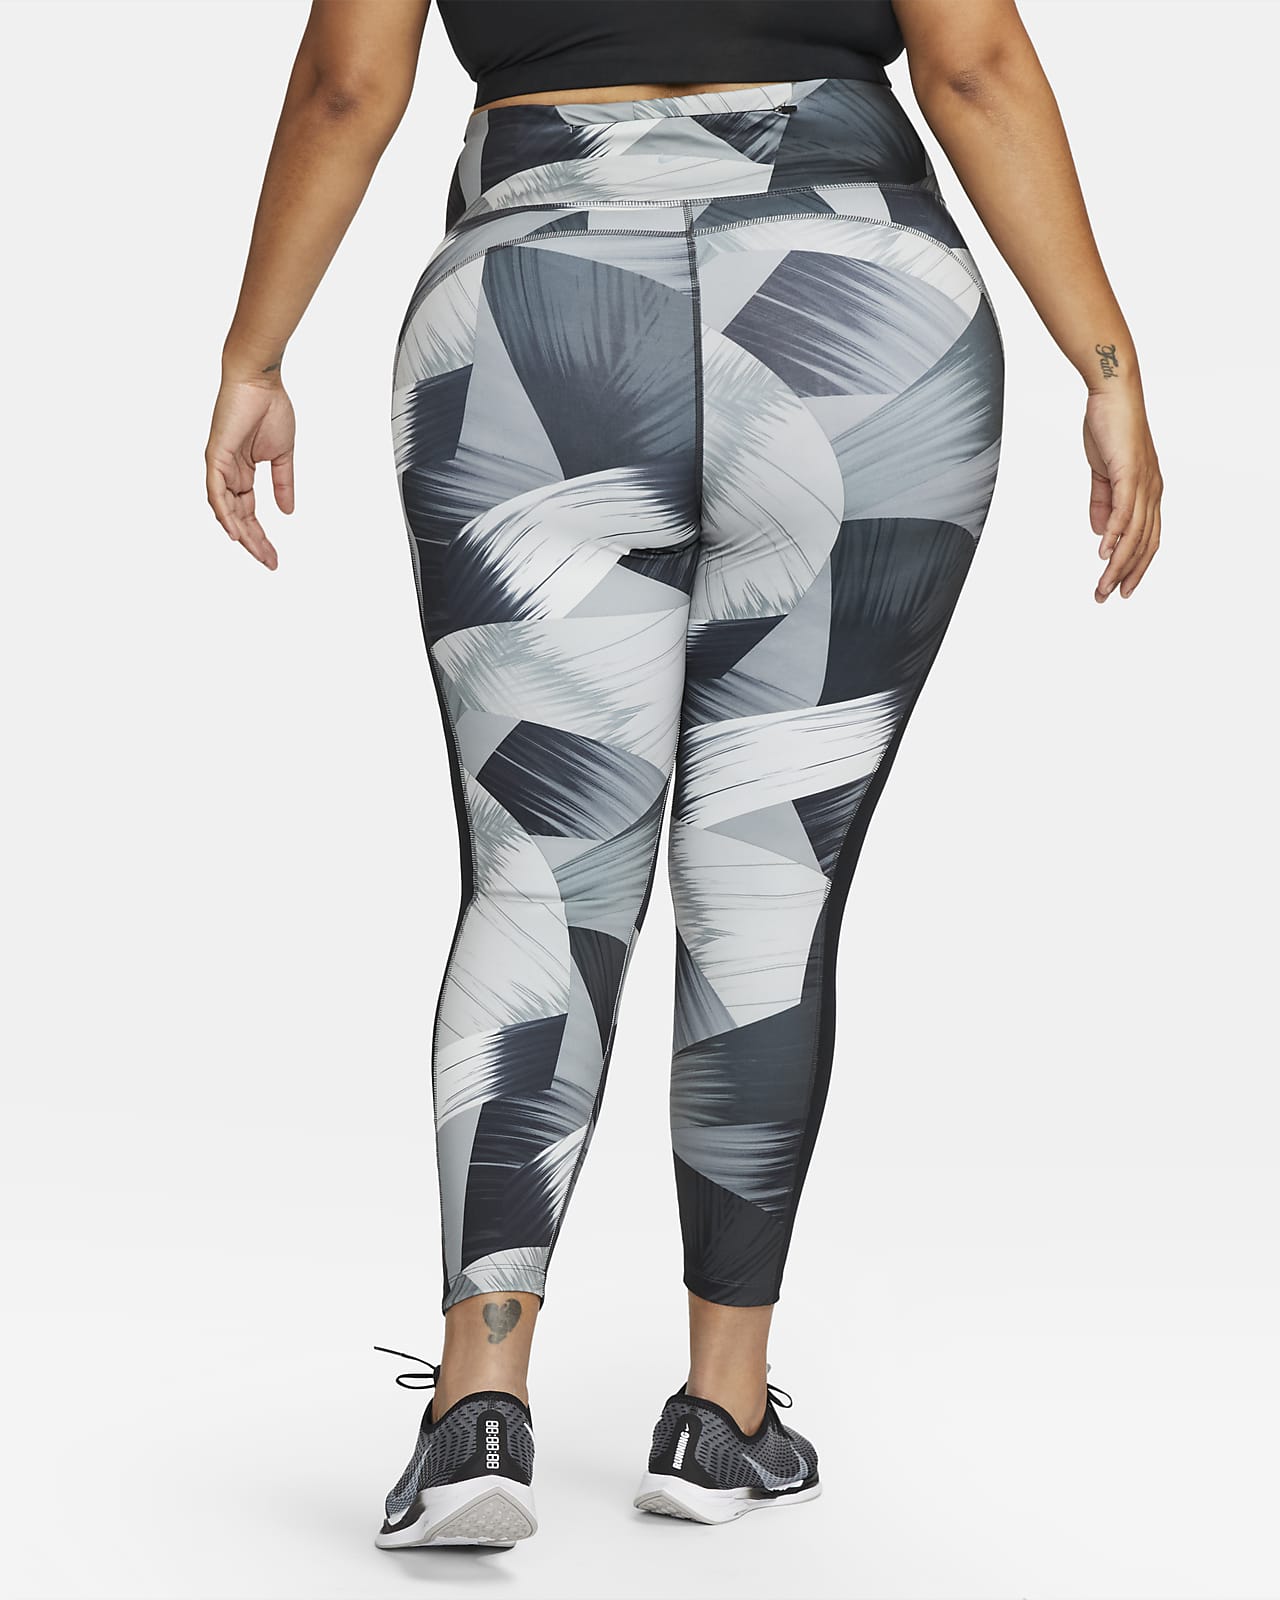 Nessi Womens Long Oslp Running Fitness Trousers Leggings Pockets Breathable 02 